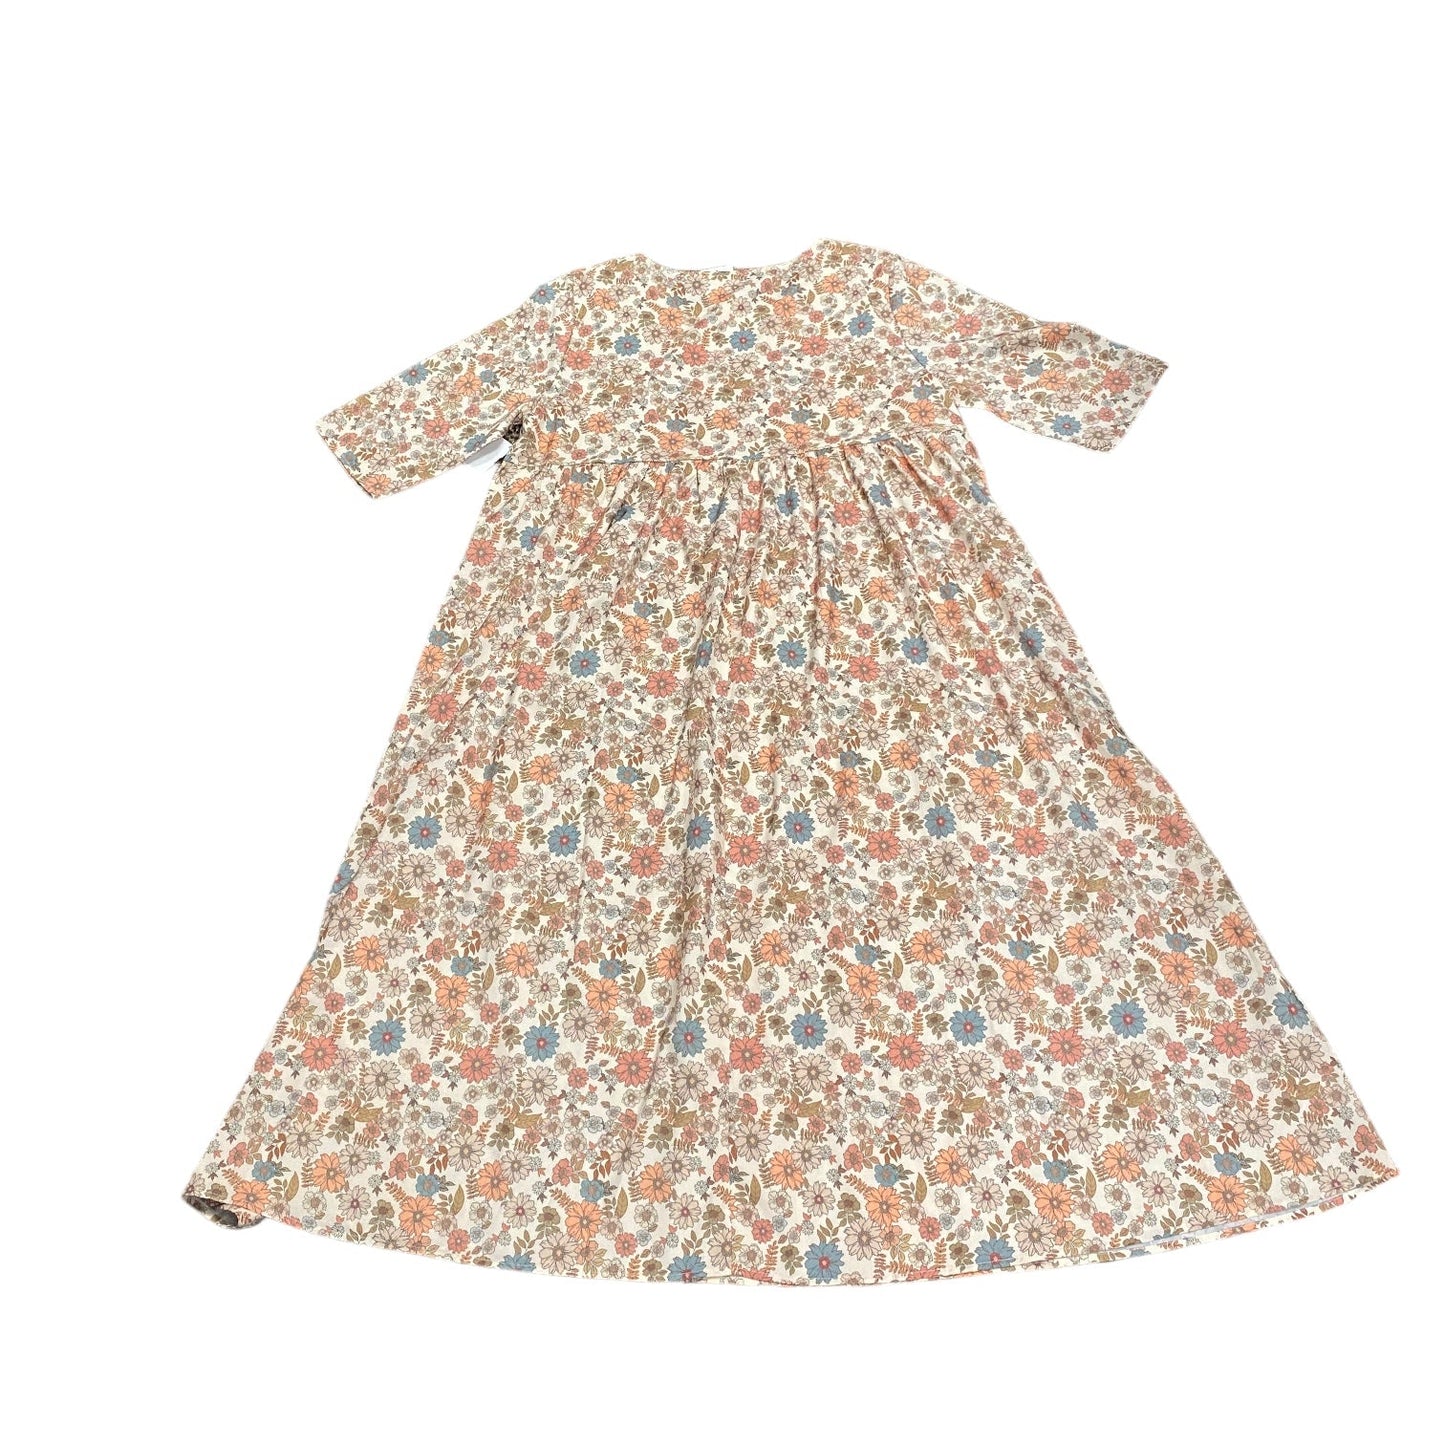 Floral Print Dress Casual Maxi Clothes Mentor, Size Xxl